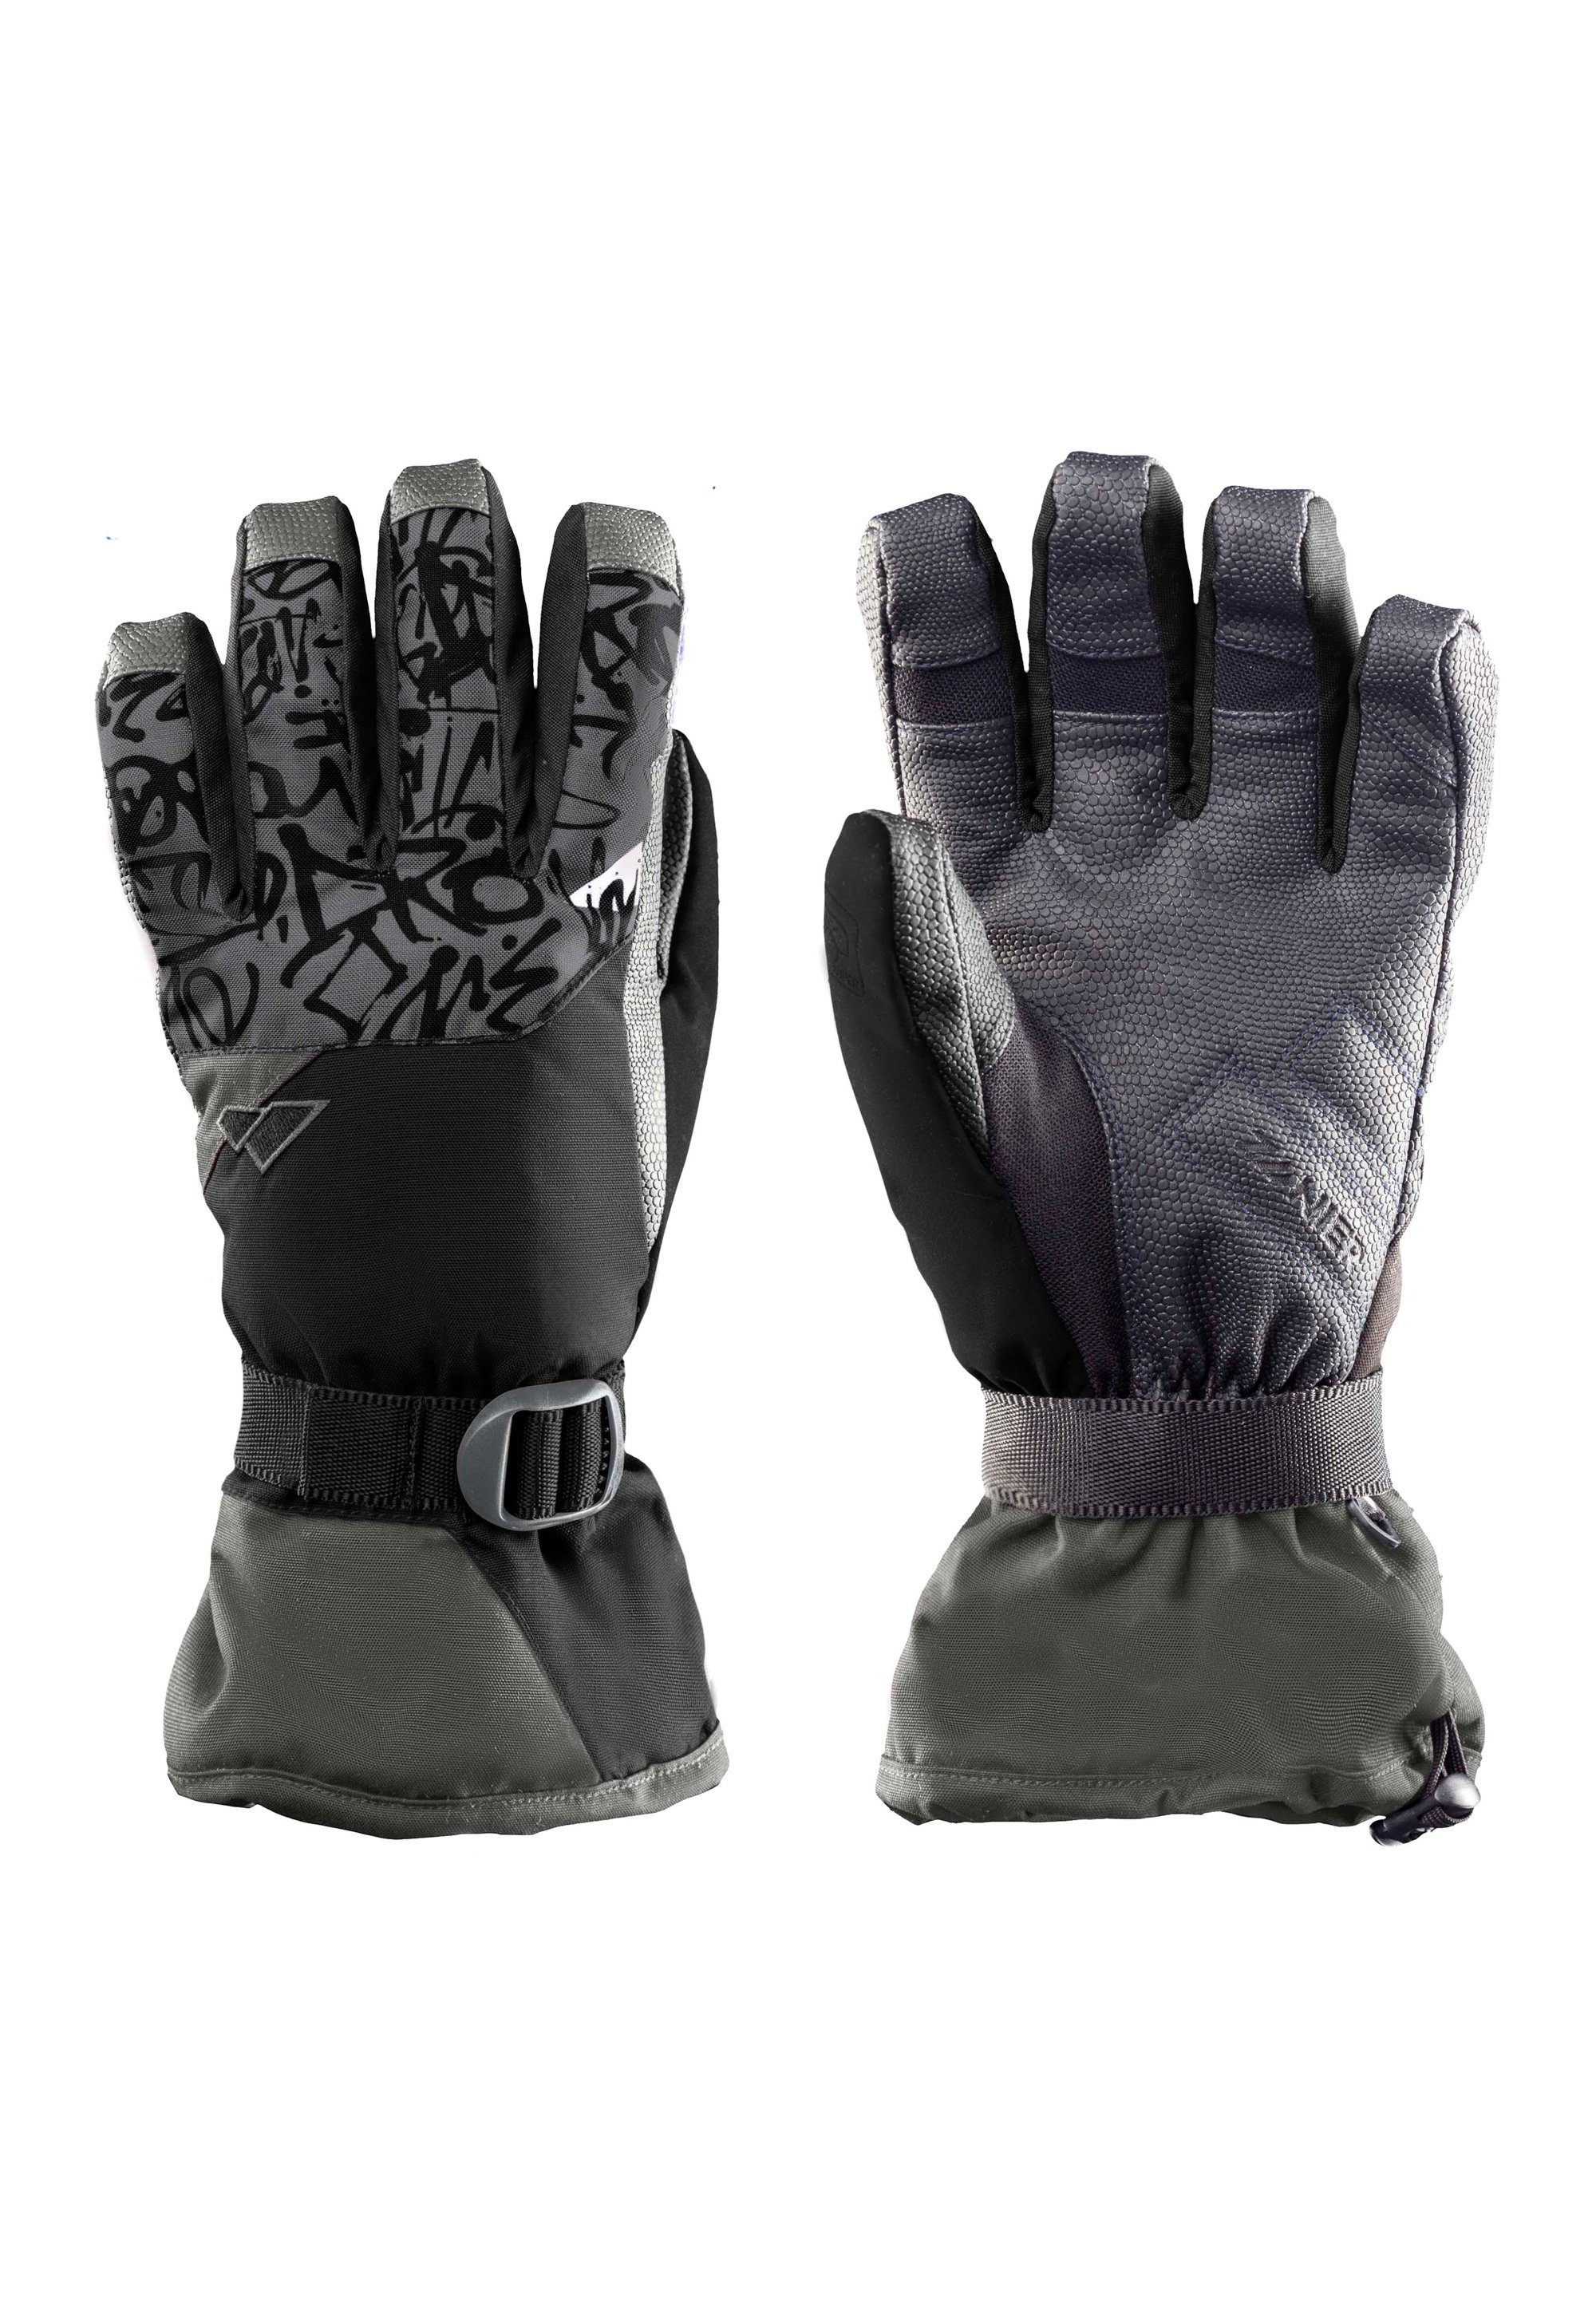 Zanier Multisporthandschuhe GAP.STX We focus black gloves on